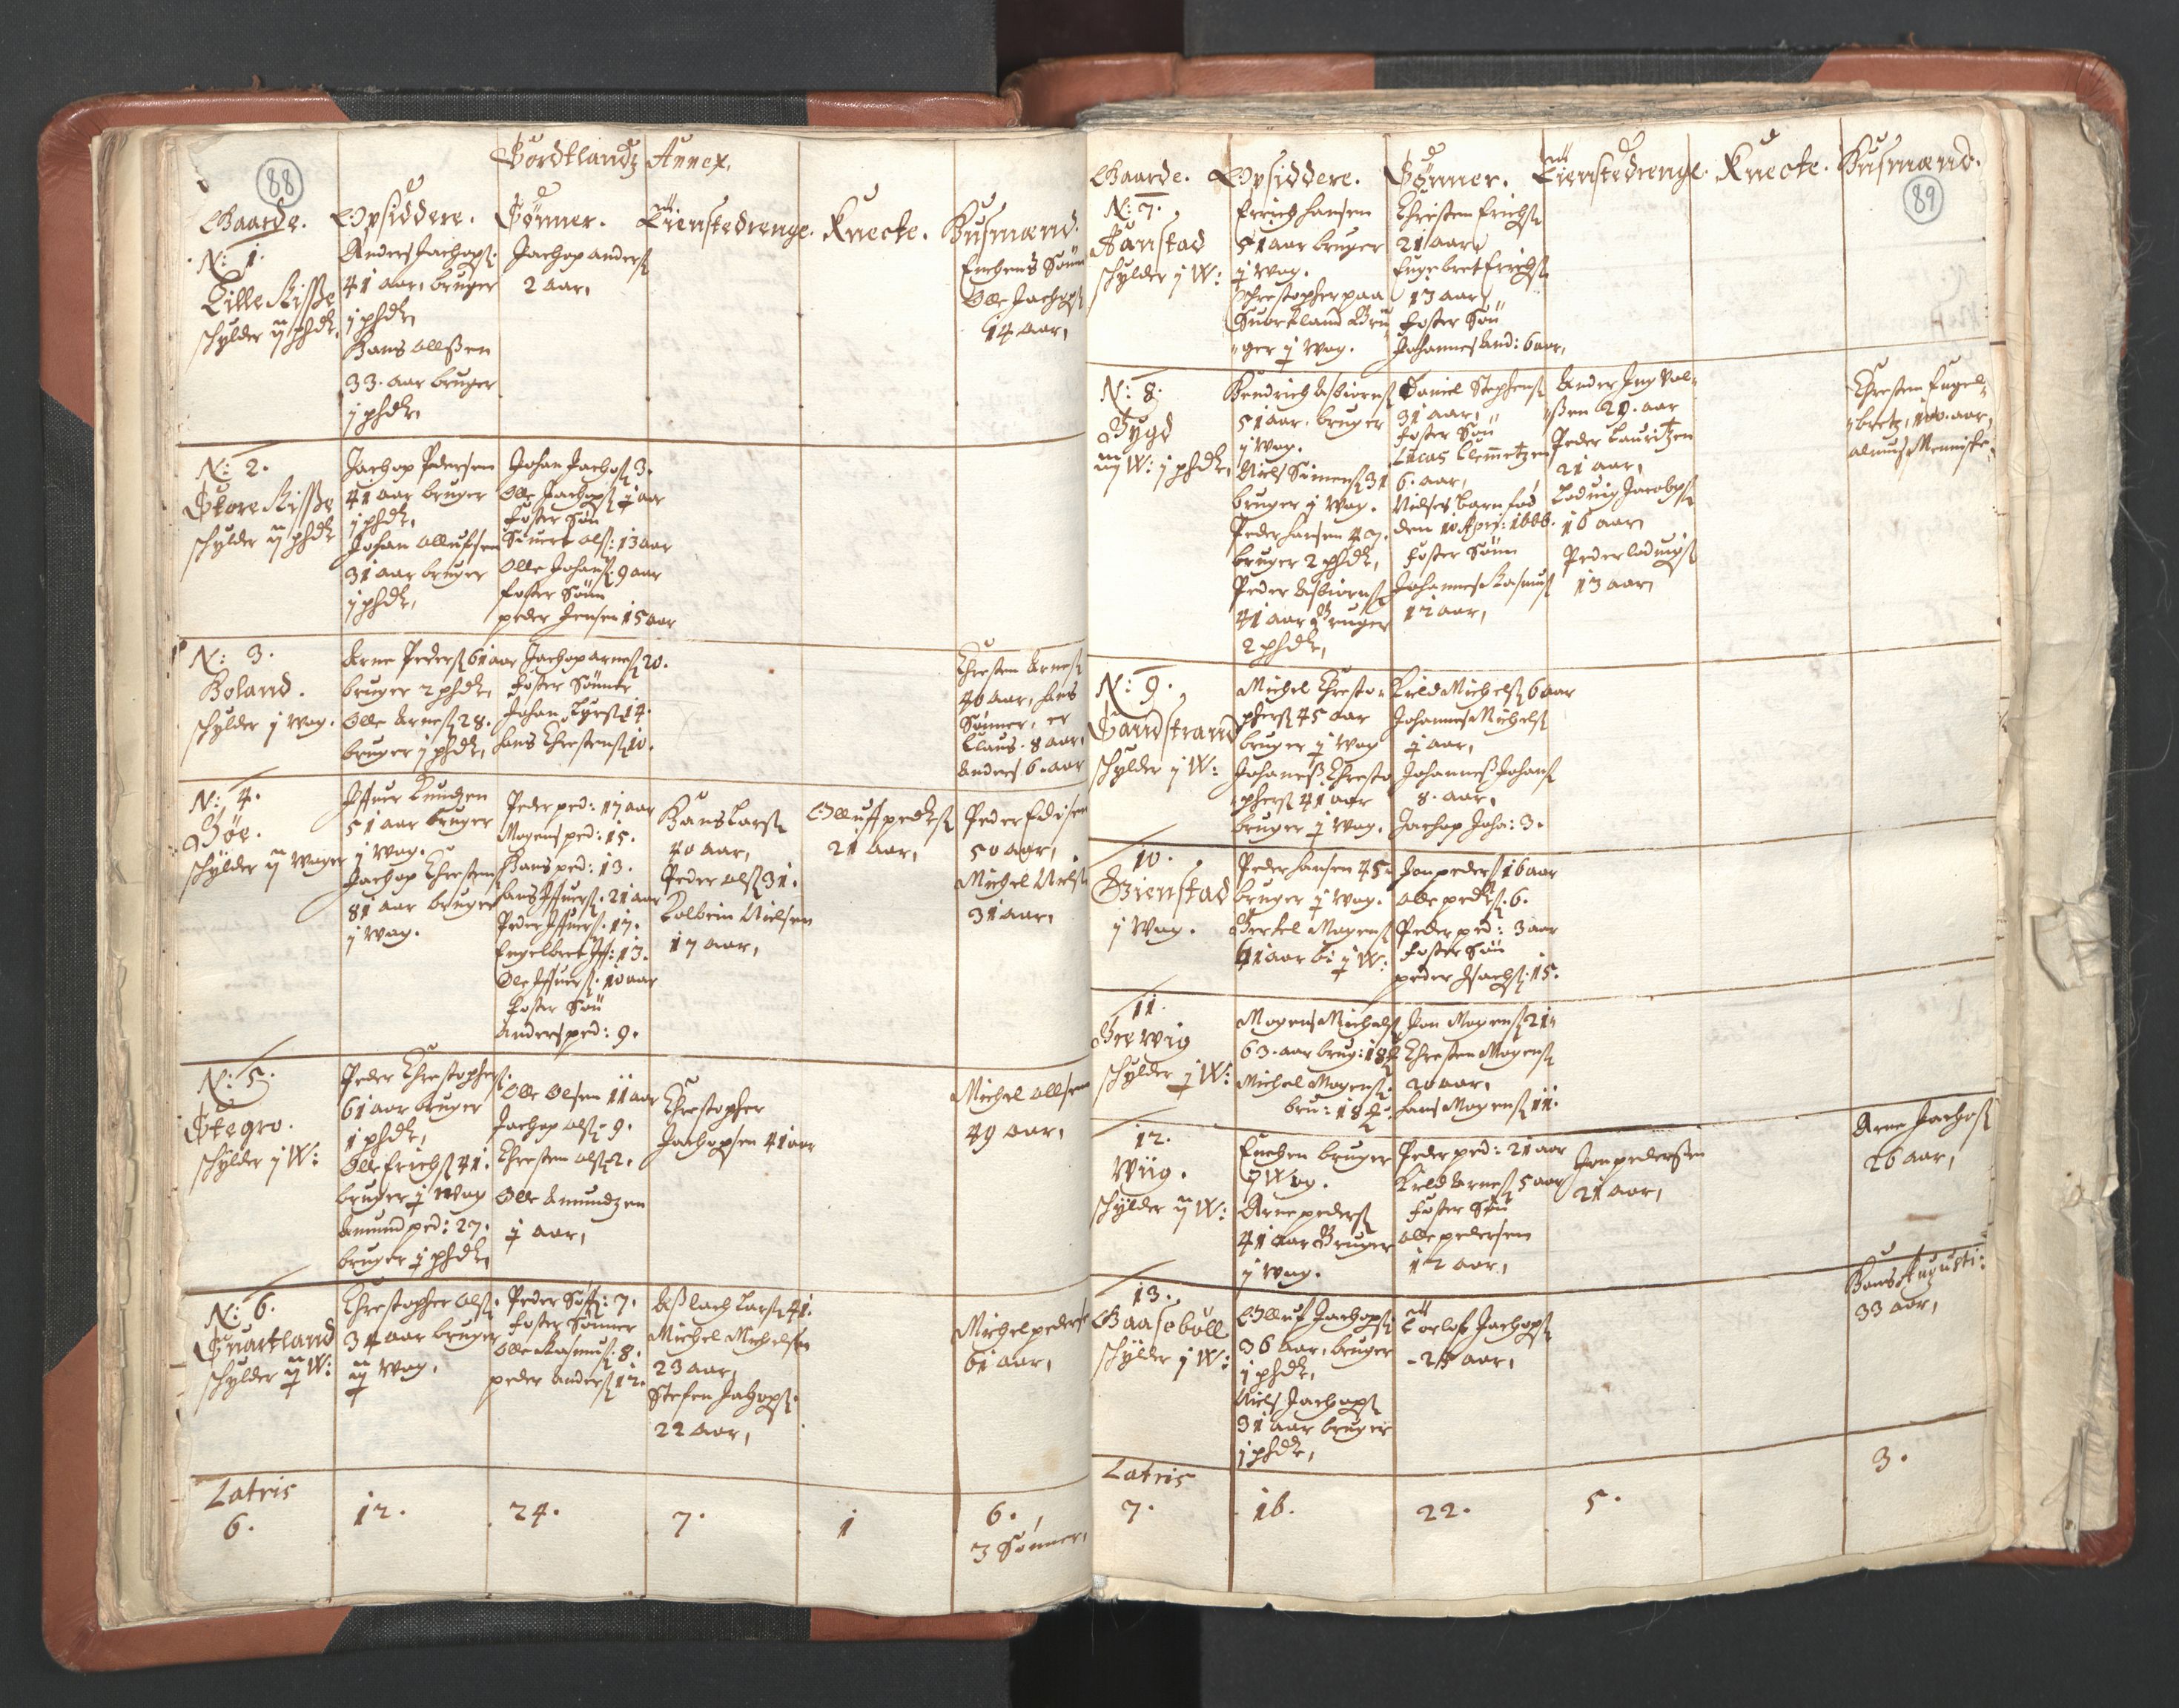 RA, Vicar's Census 1664-1666, no. 36: Lofoten and Vesterålen deanery, Senja deanery and Troms deanery, 1664-1666, p. 88-89